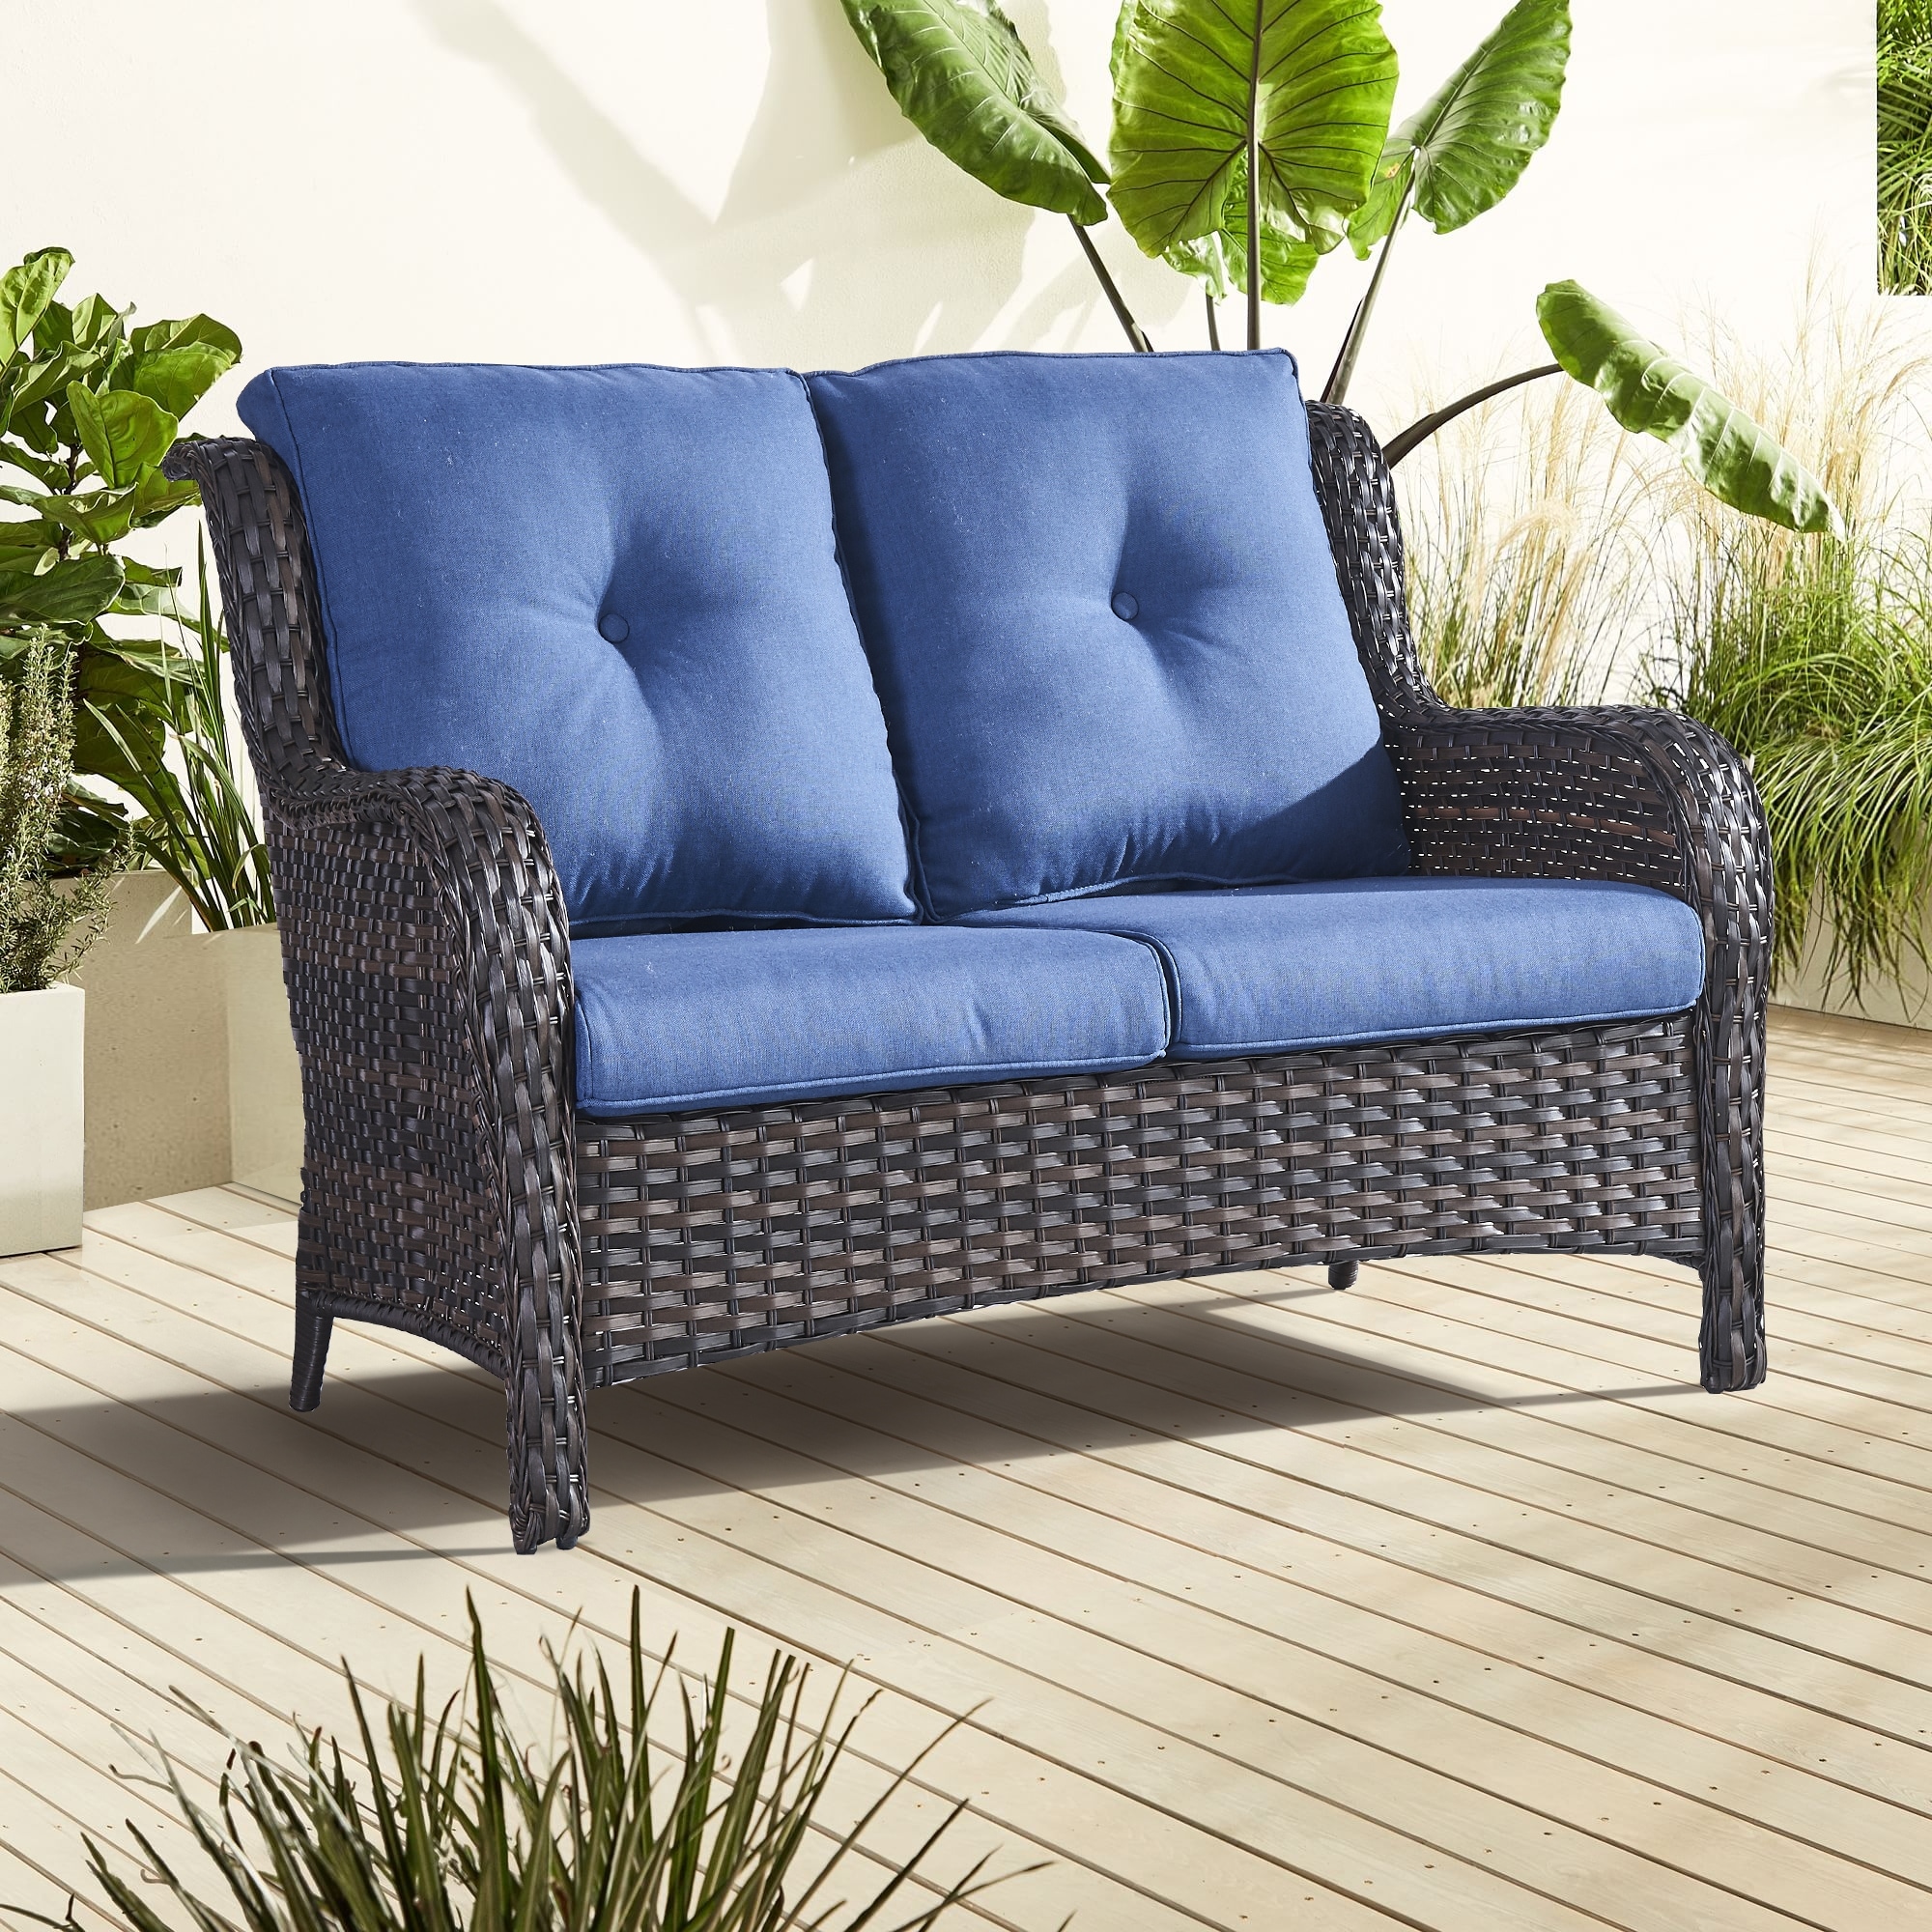 Outdoor High-back Wicker Loveseat Sofa For Home Garden